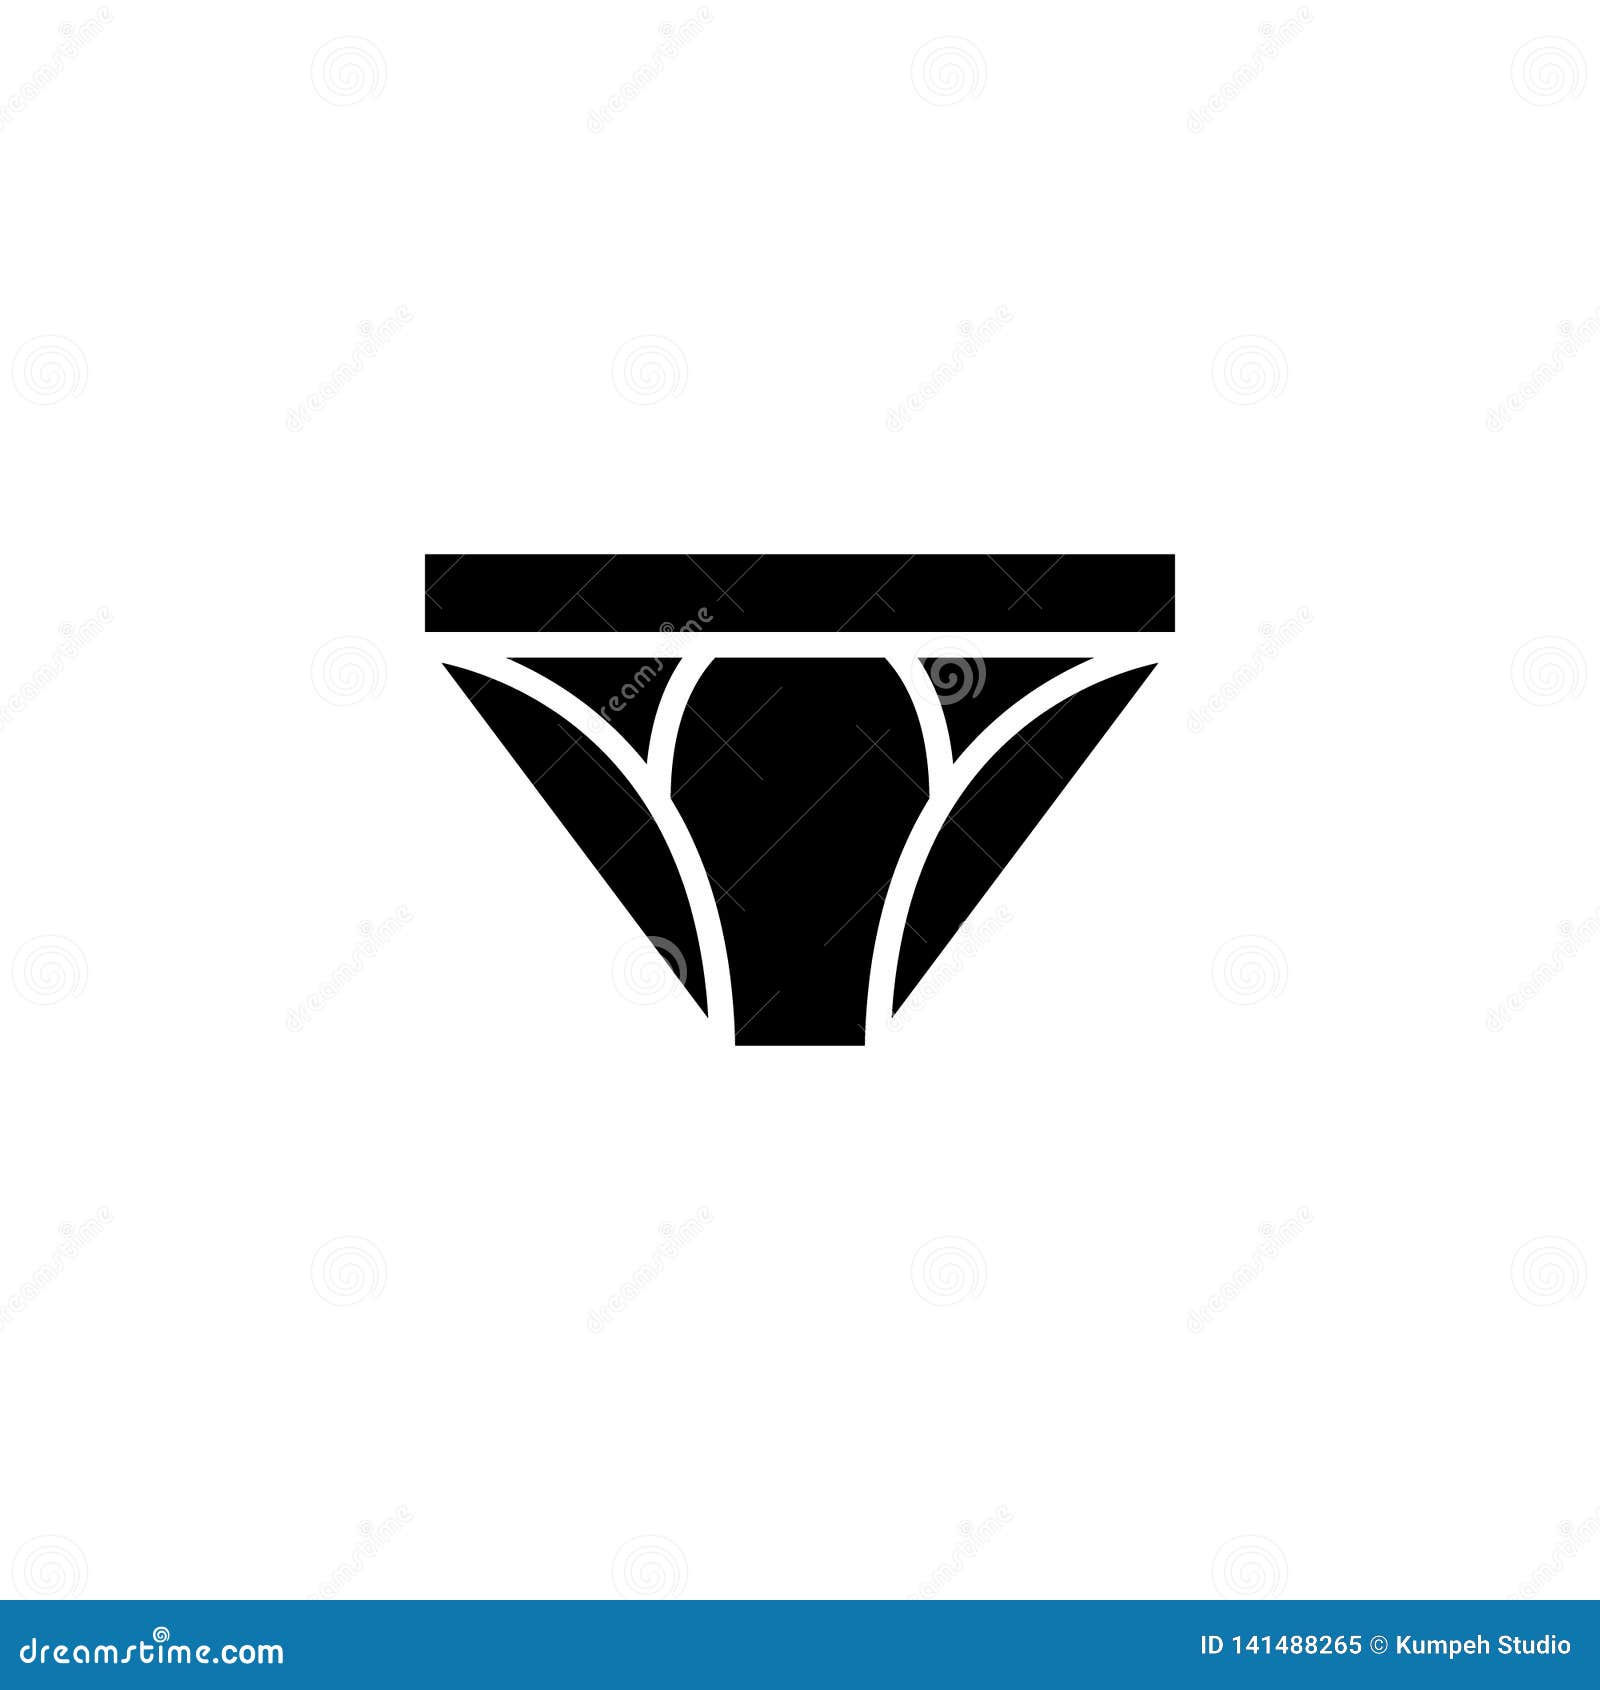 Black Underwear Silhouette Transparent Background, Underwear Icon With  Glyph Style In Black Solid, Style Icons, Black Icons, In Icons PNG Image  For Free Download